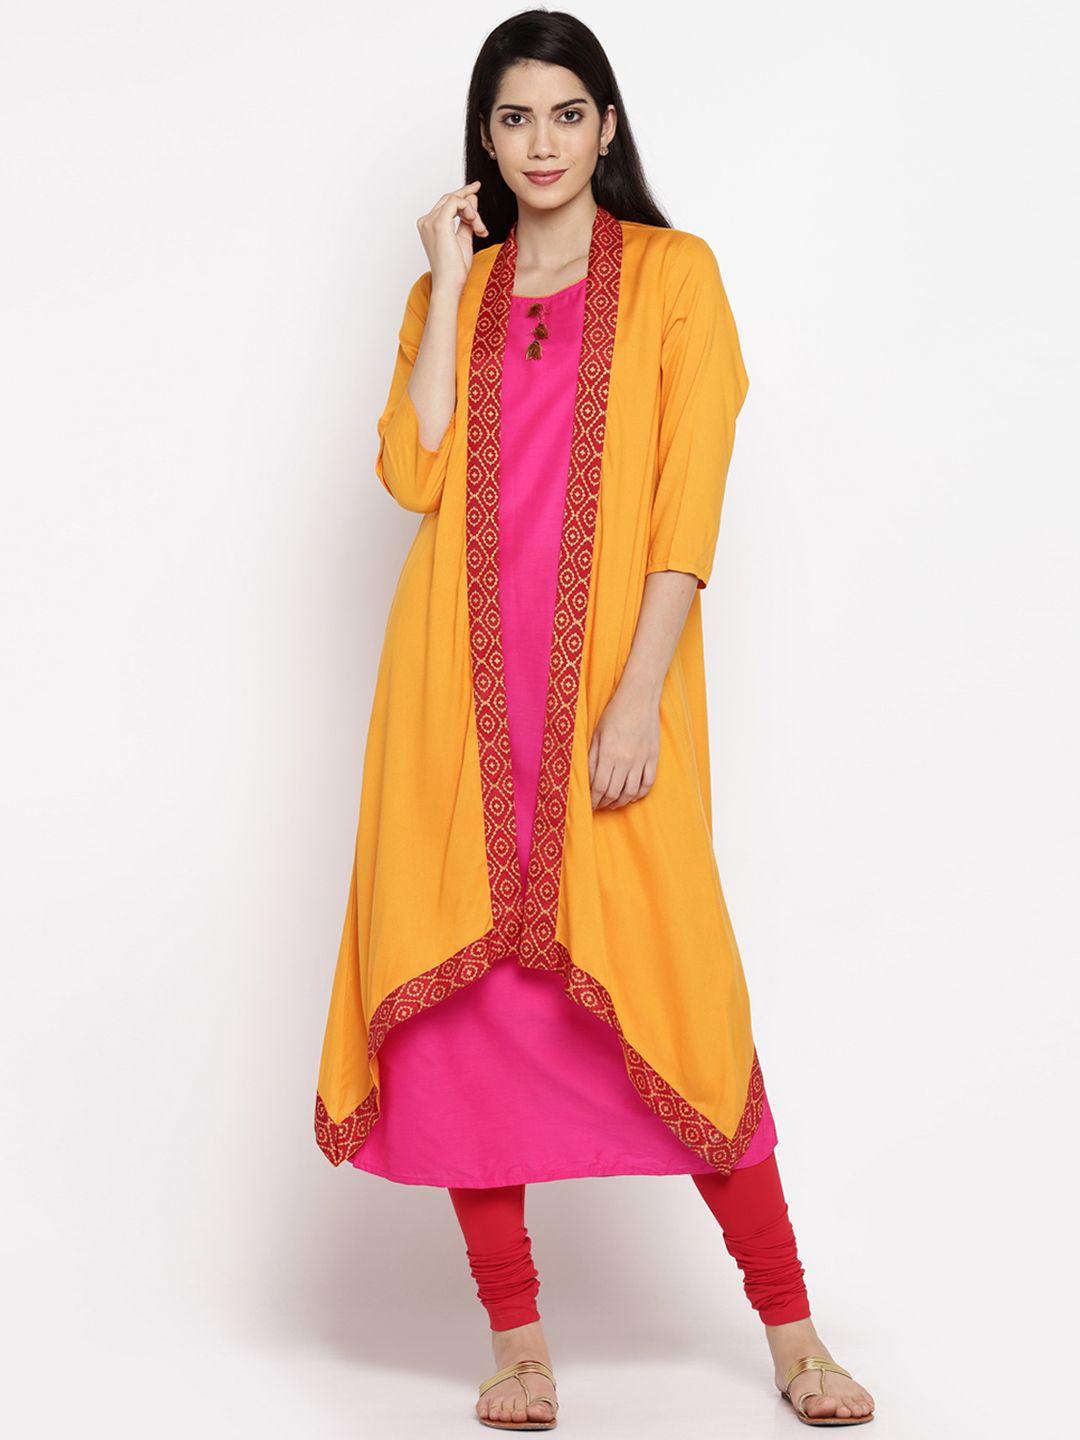 rangmanch by pantaloons women pink solid straight kurta with ethnic jacket